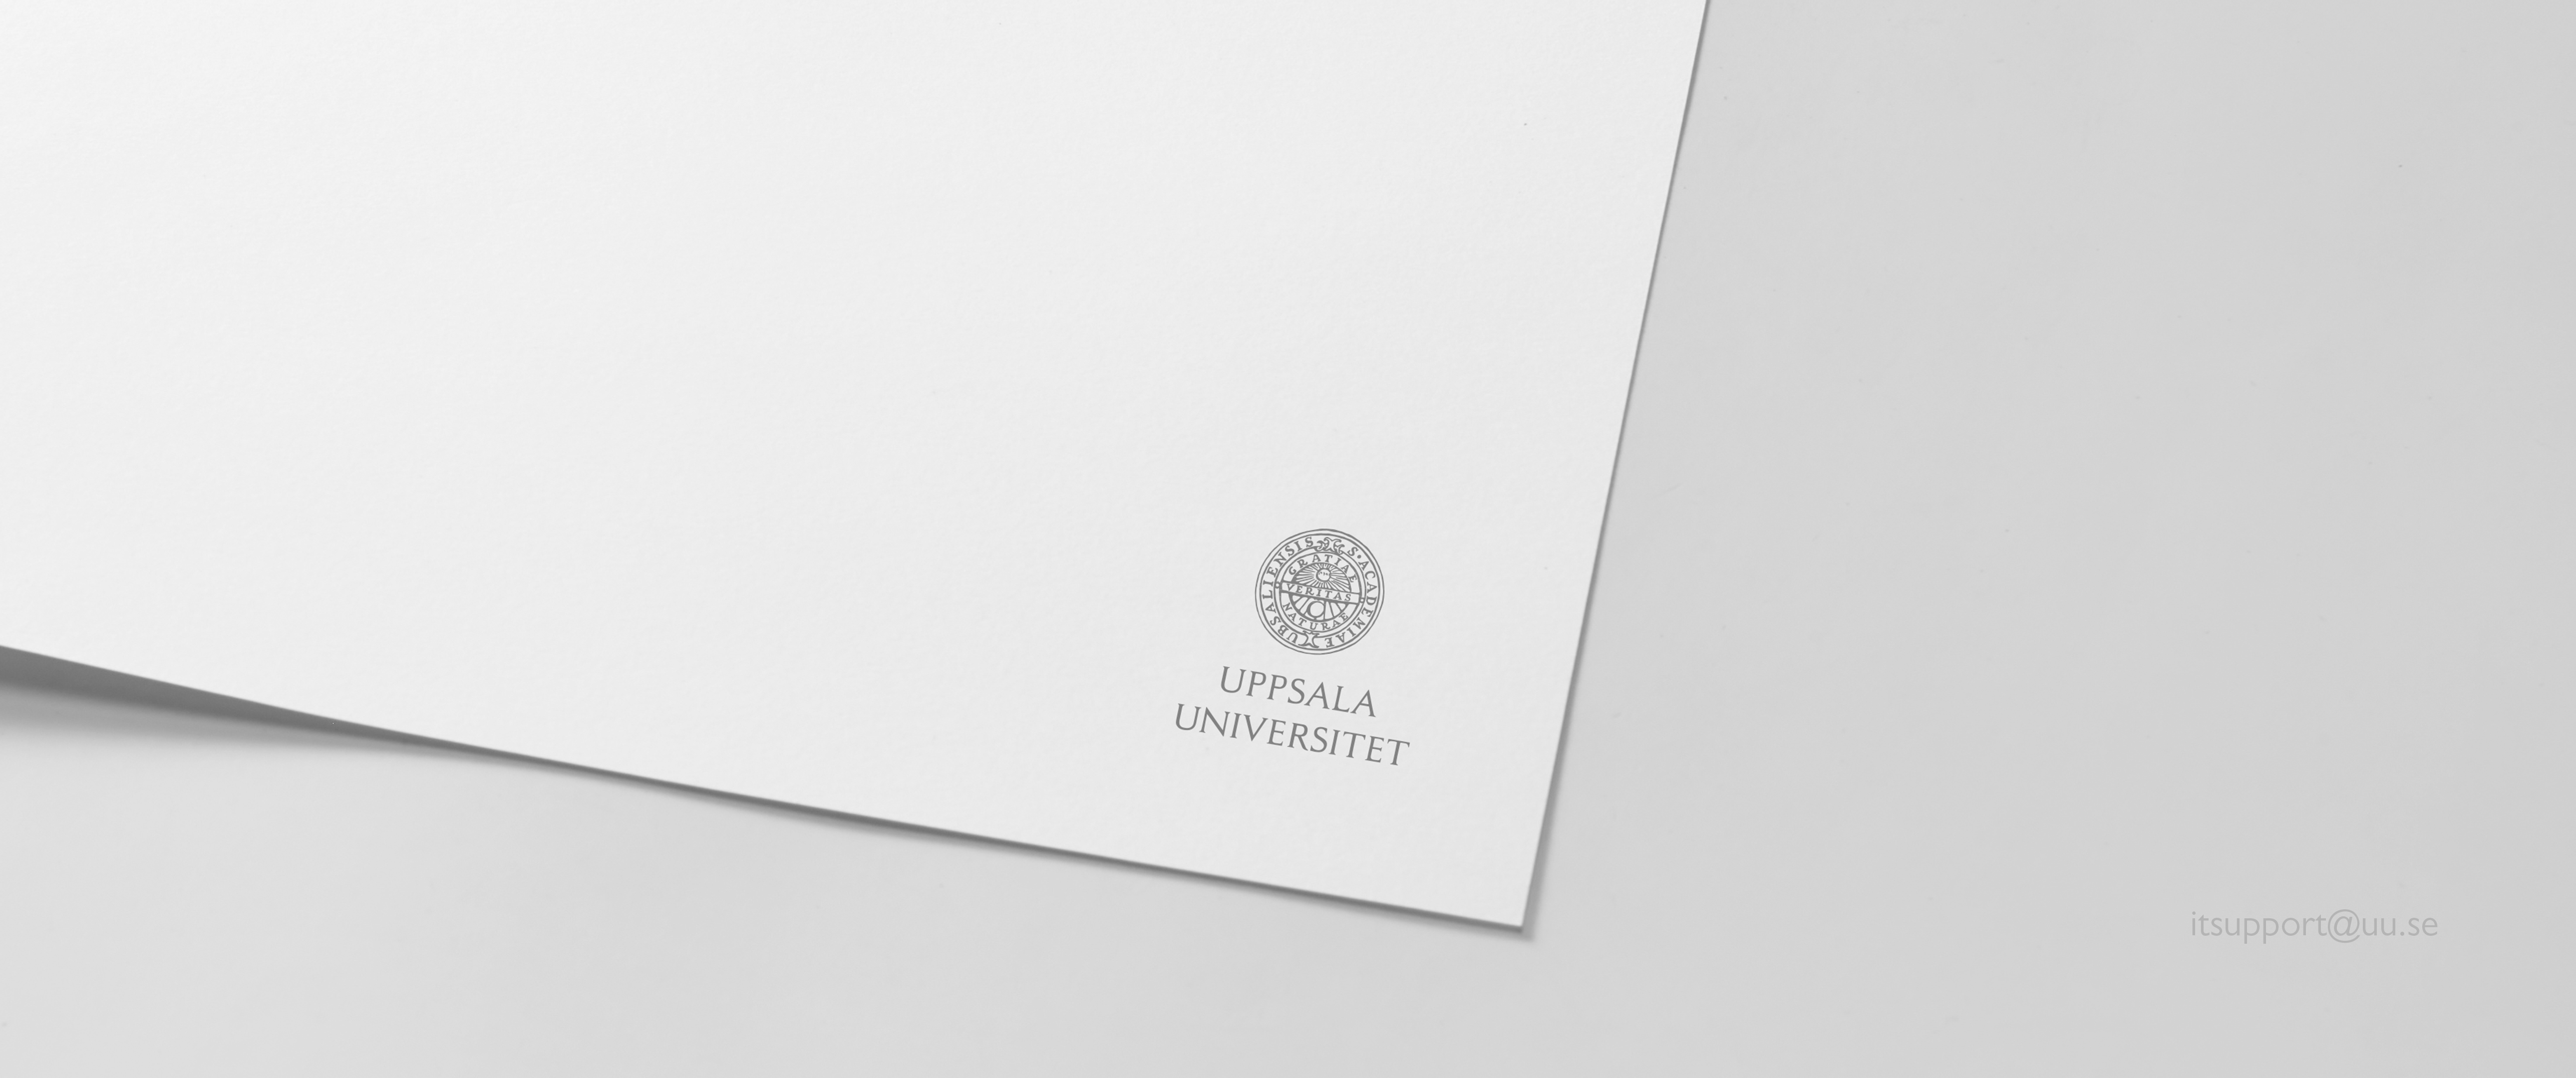 Superbred bakgrundsbild med ett vitt papper med universitetets logotyp.